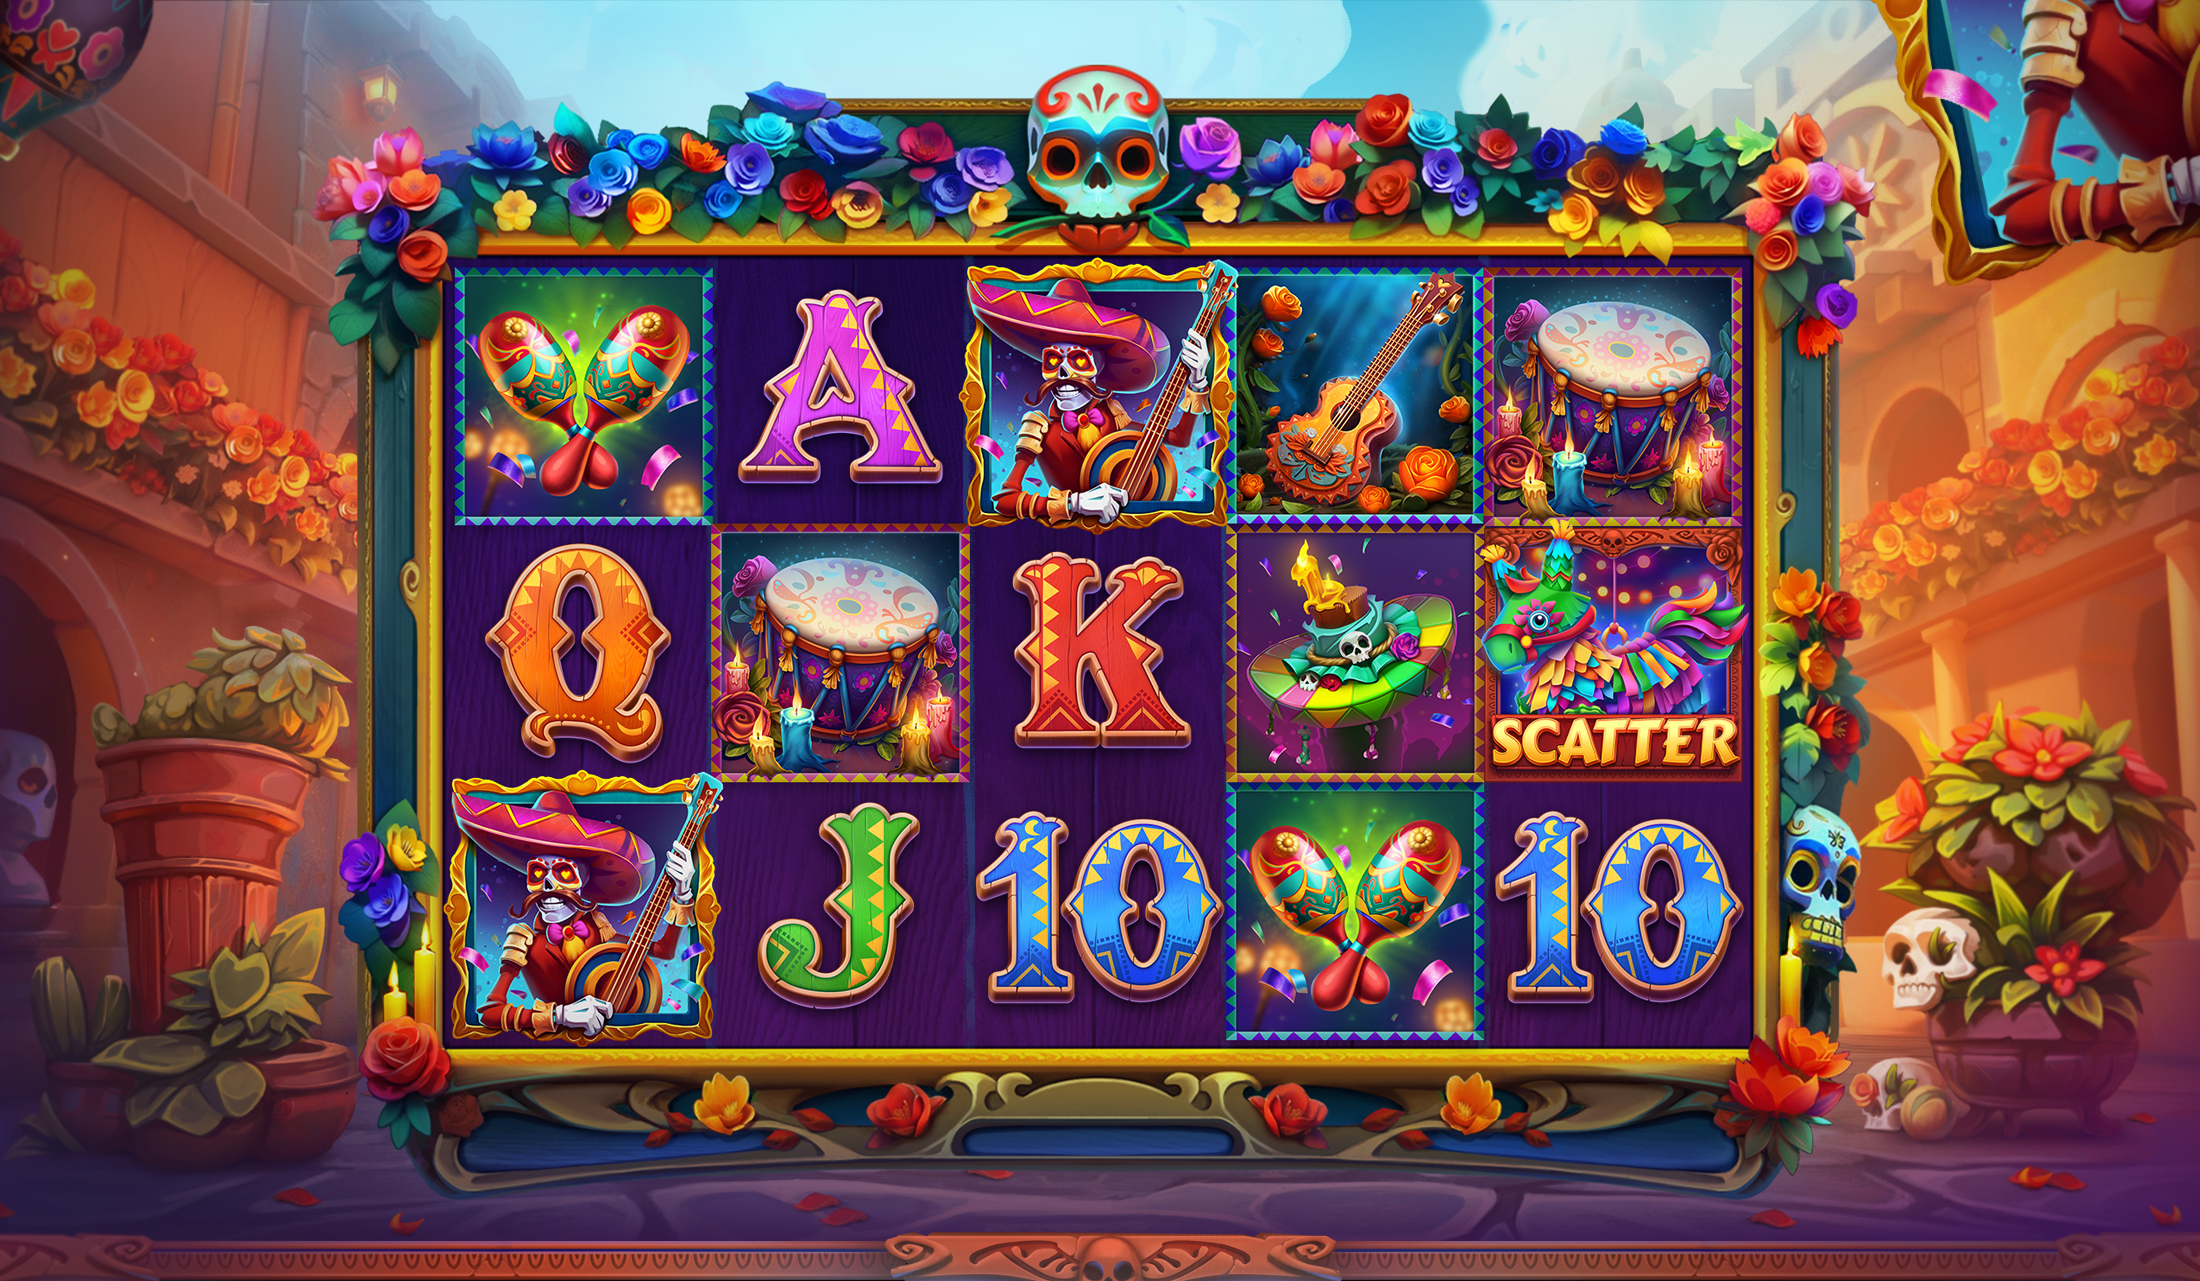 Muertos Fortune slot machine art